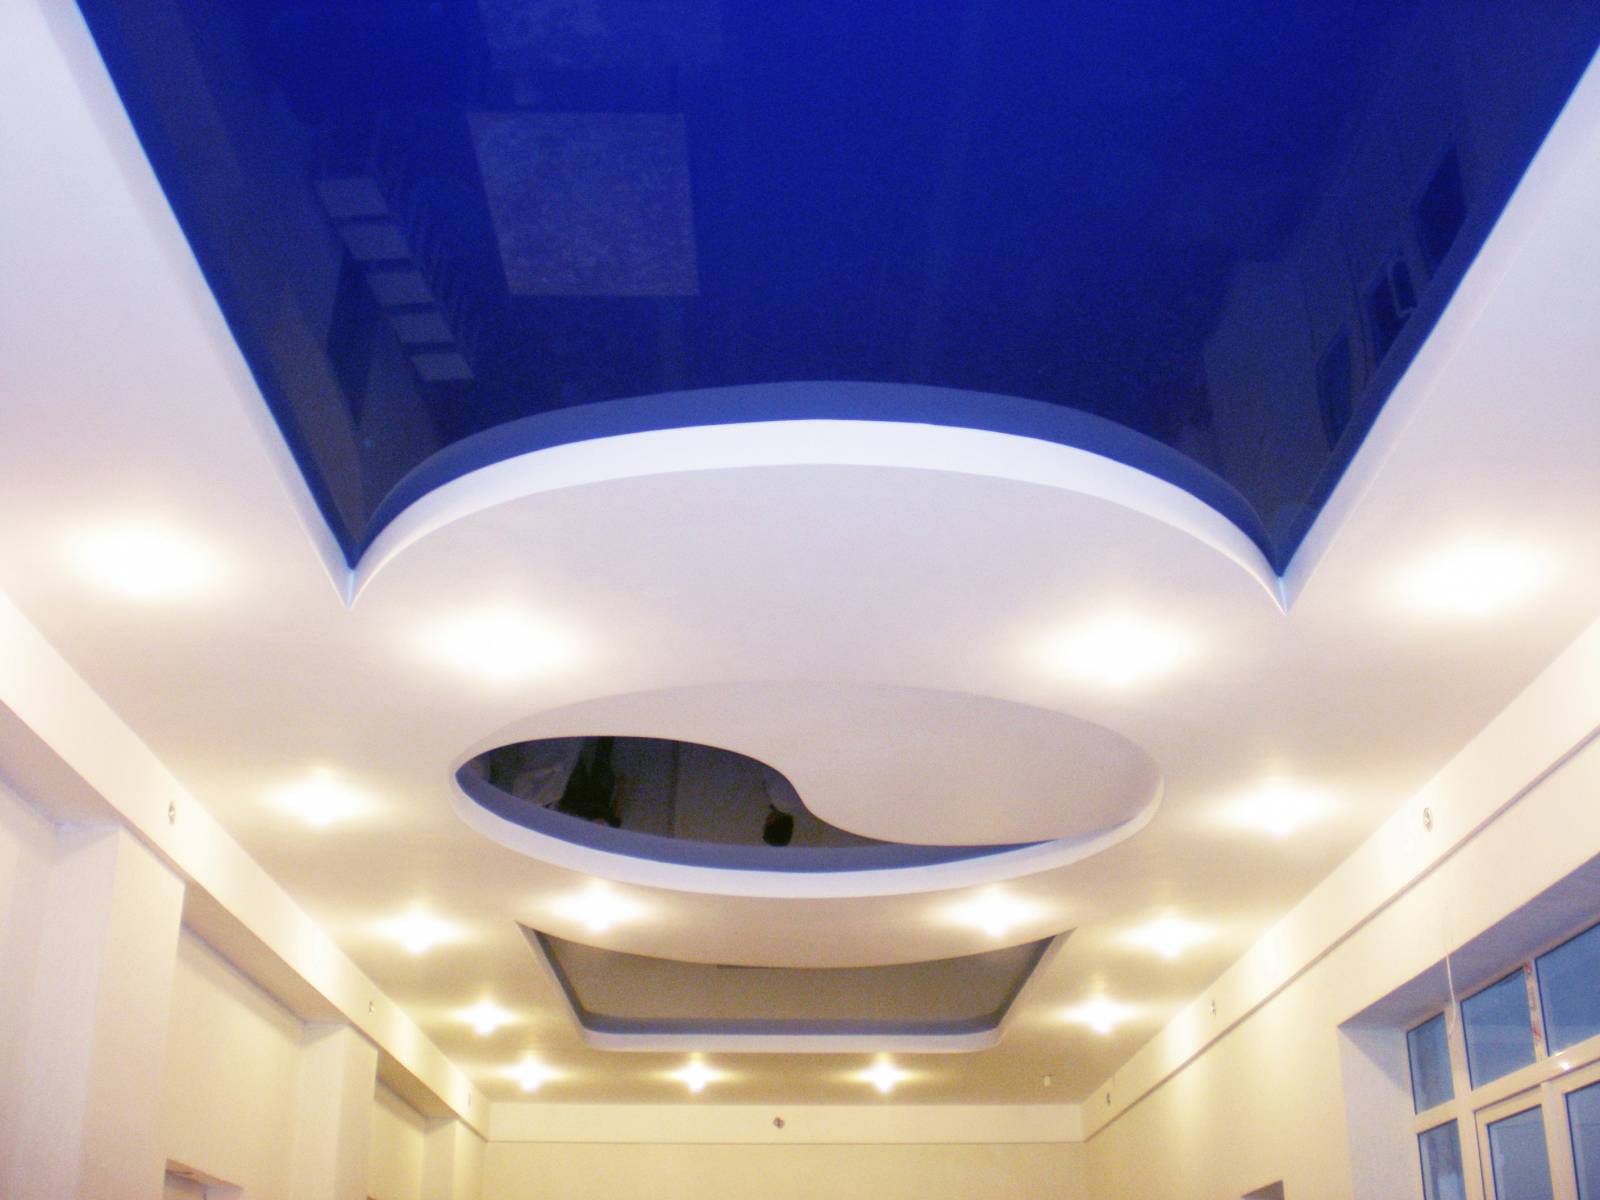 Unutrašnjost dnevne sobe s tamnoplavim rastezljivim stropom